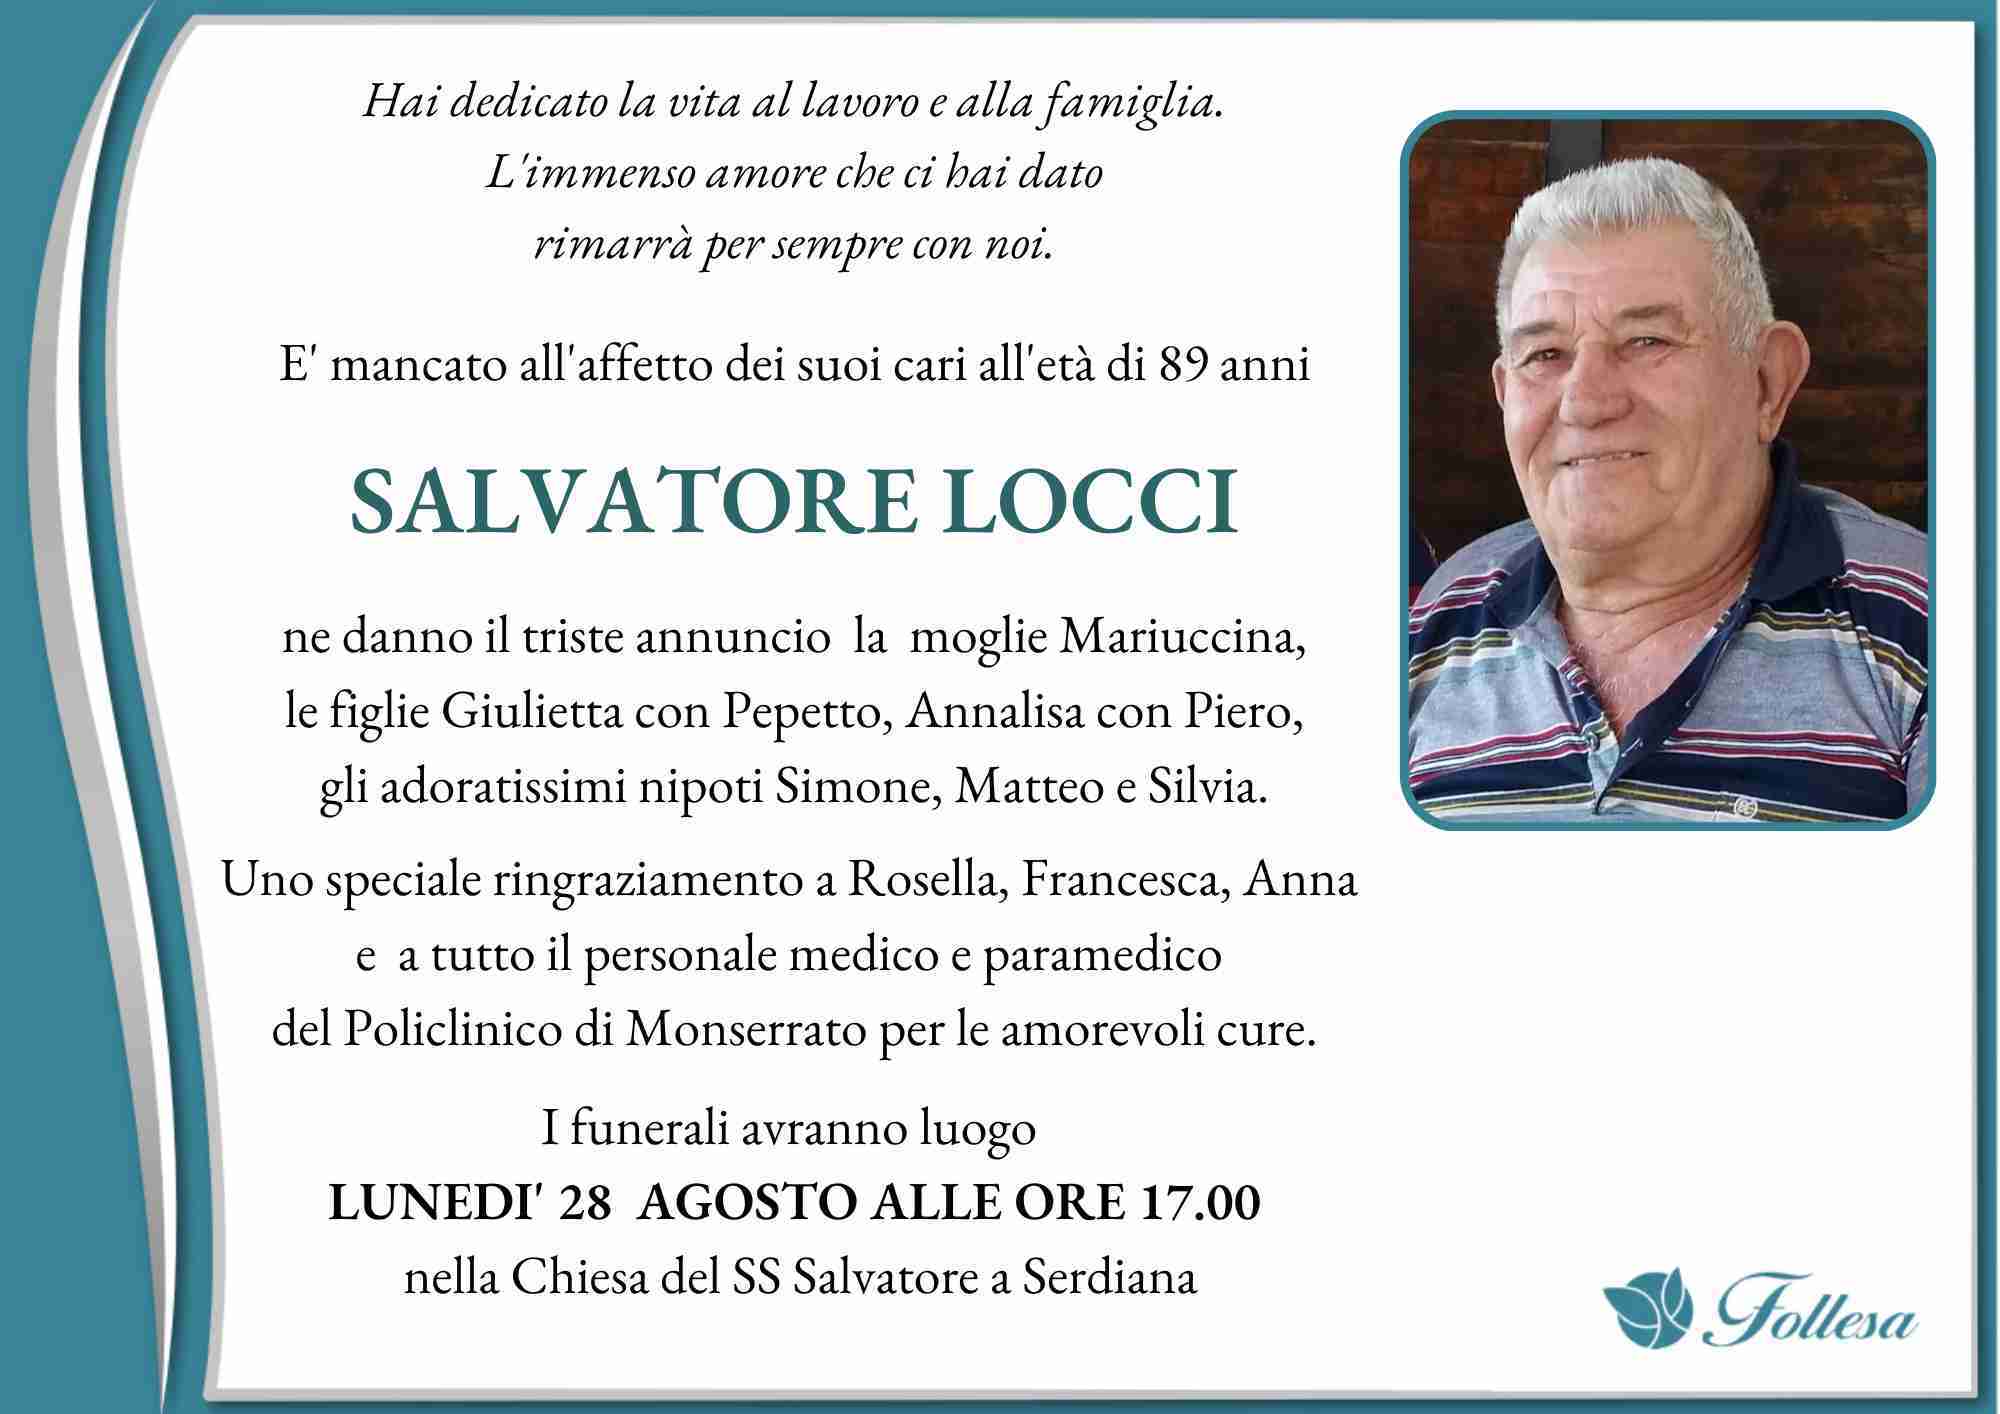 Salvatore Locci